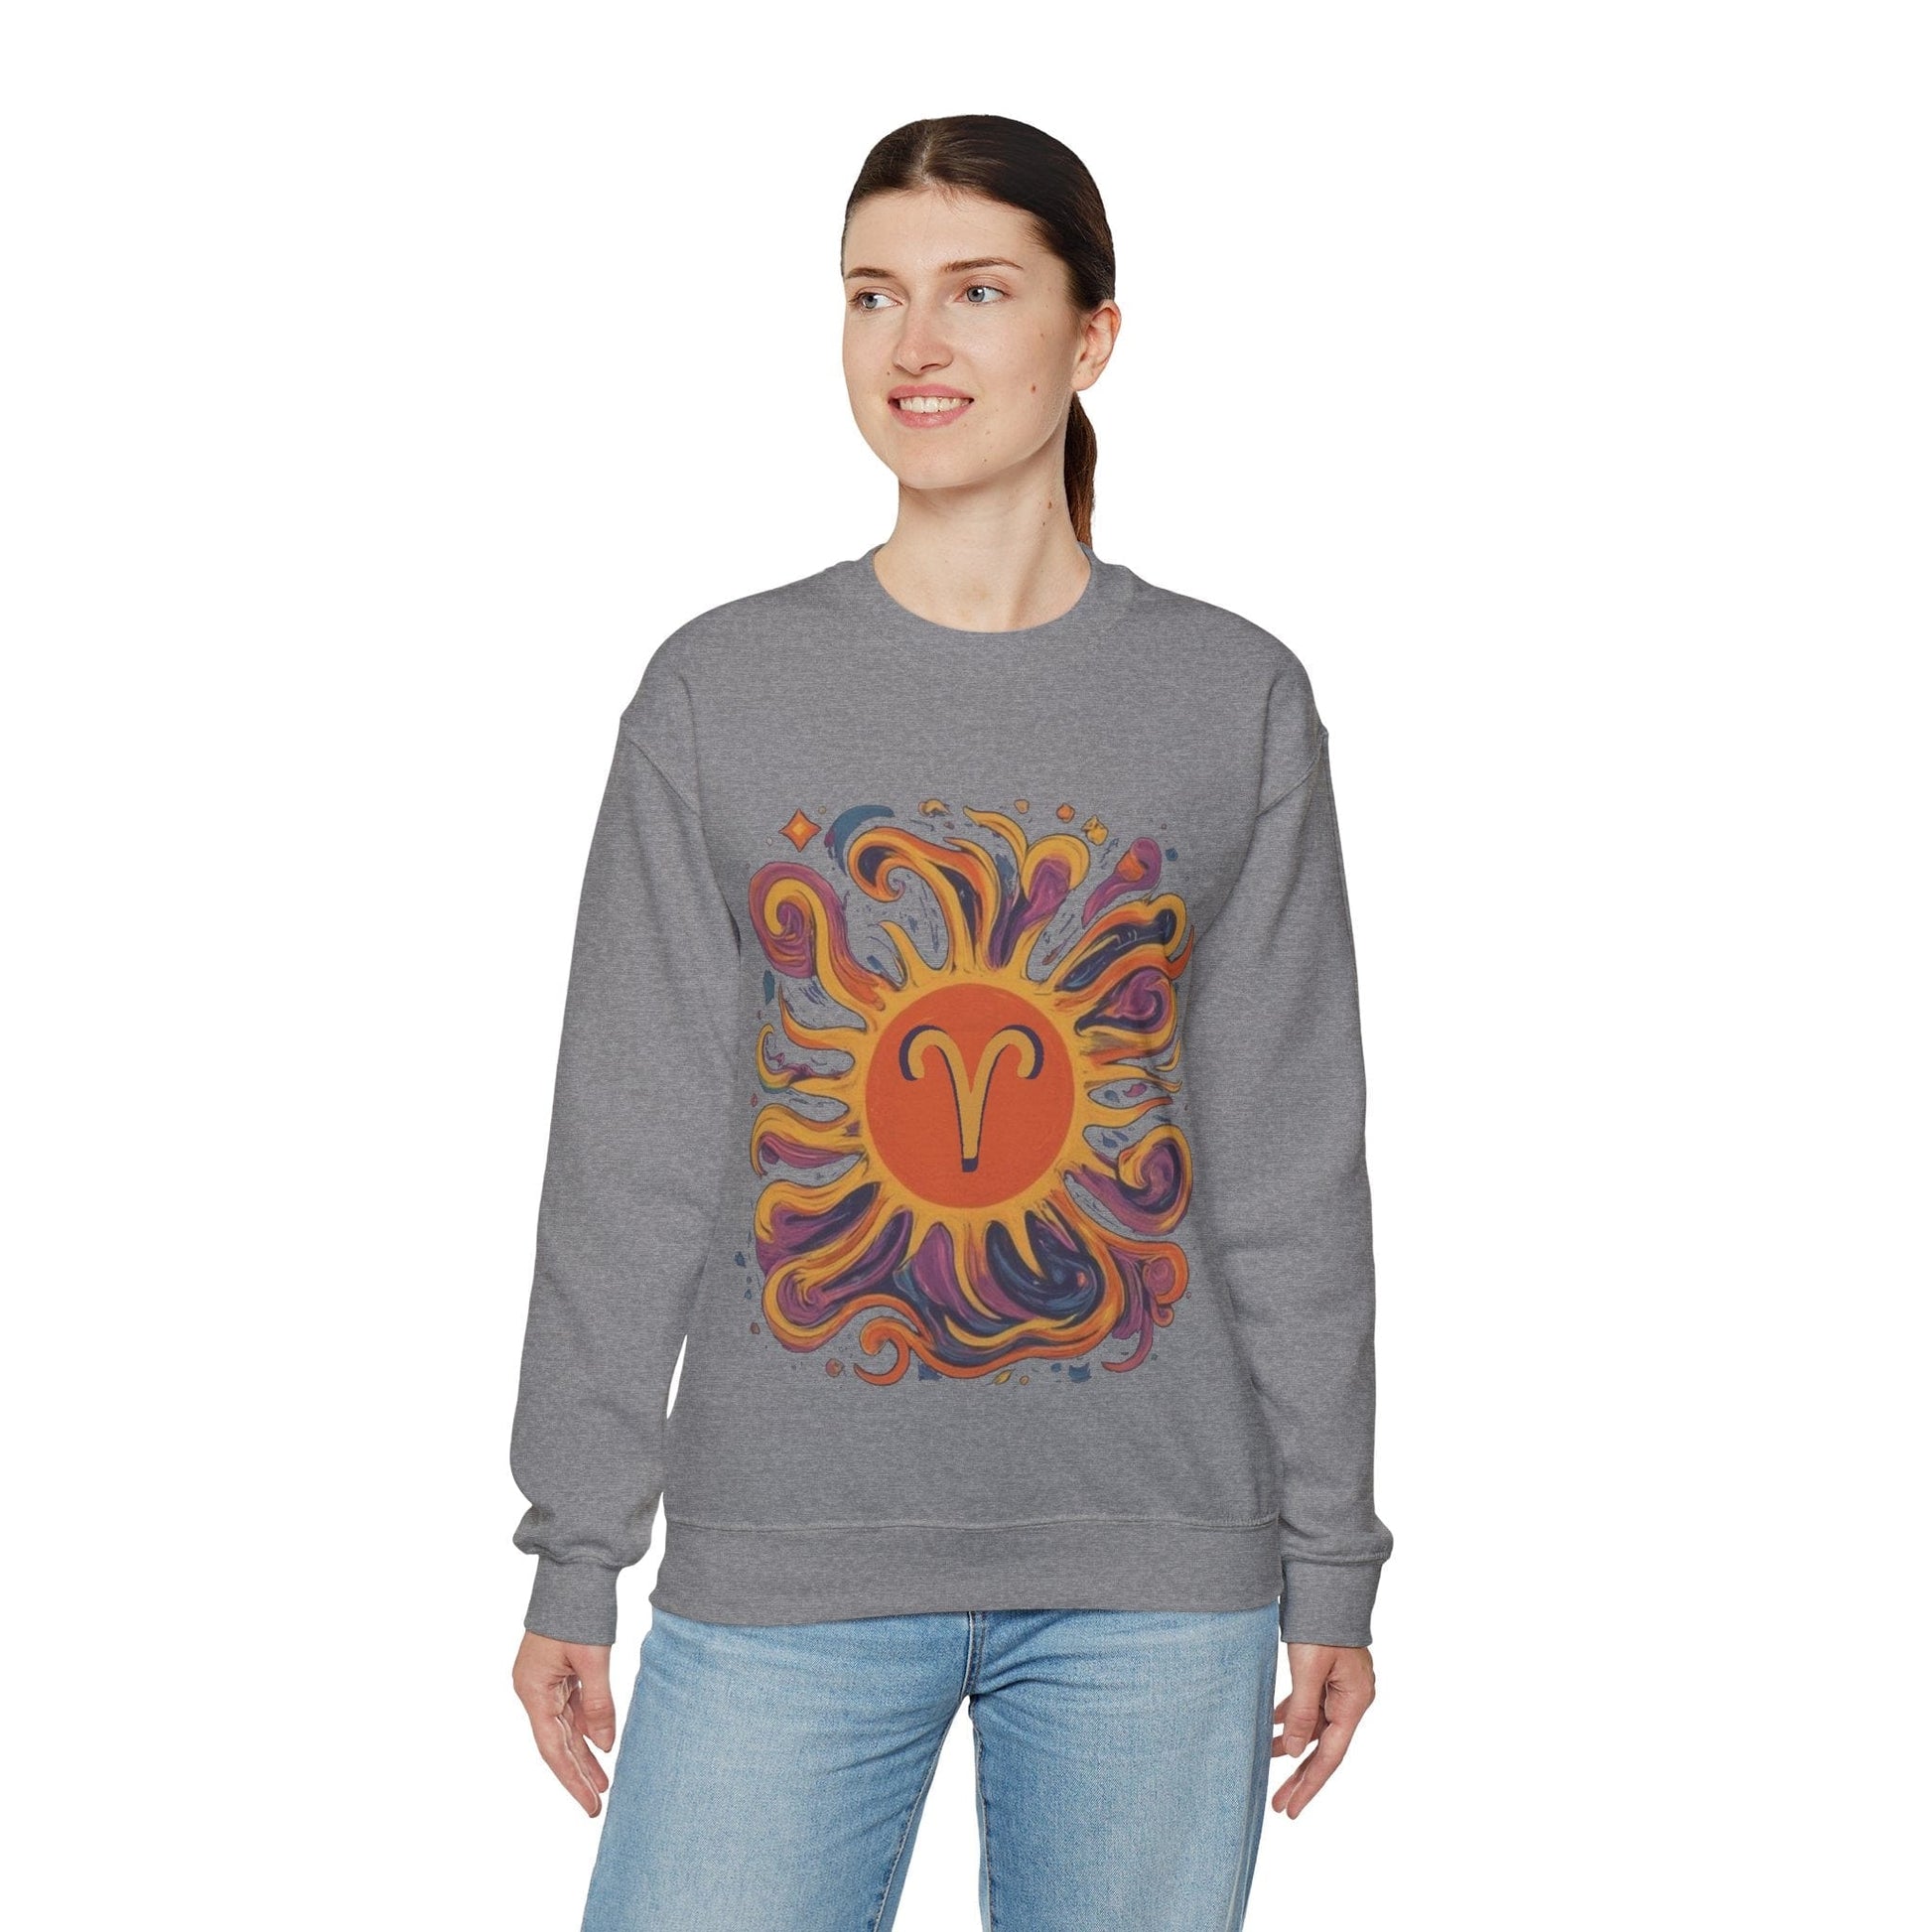 Sweatshirt Aries Energetic Swirl Soft Sweater: Ignite Your Cozy Side